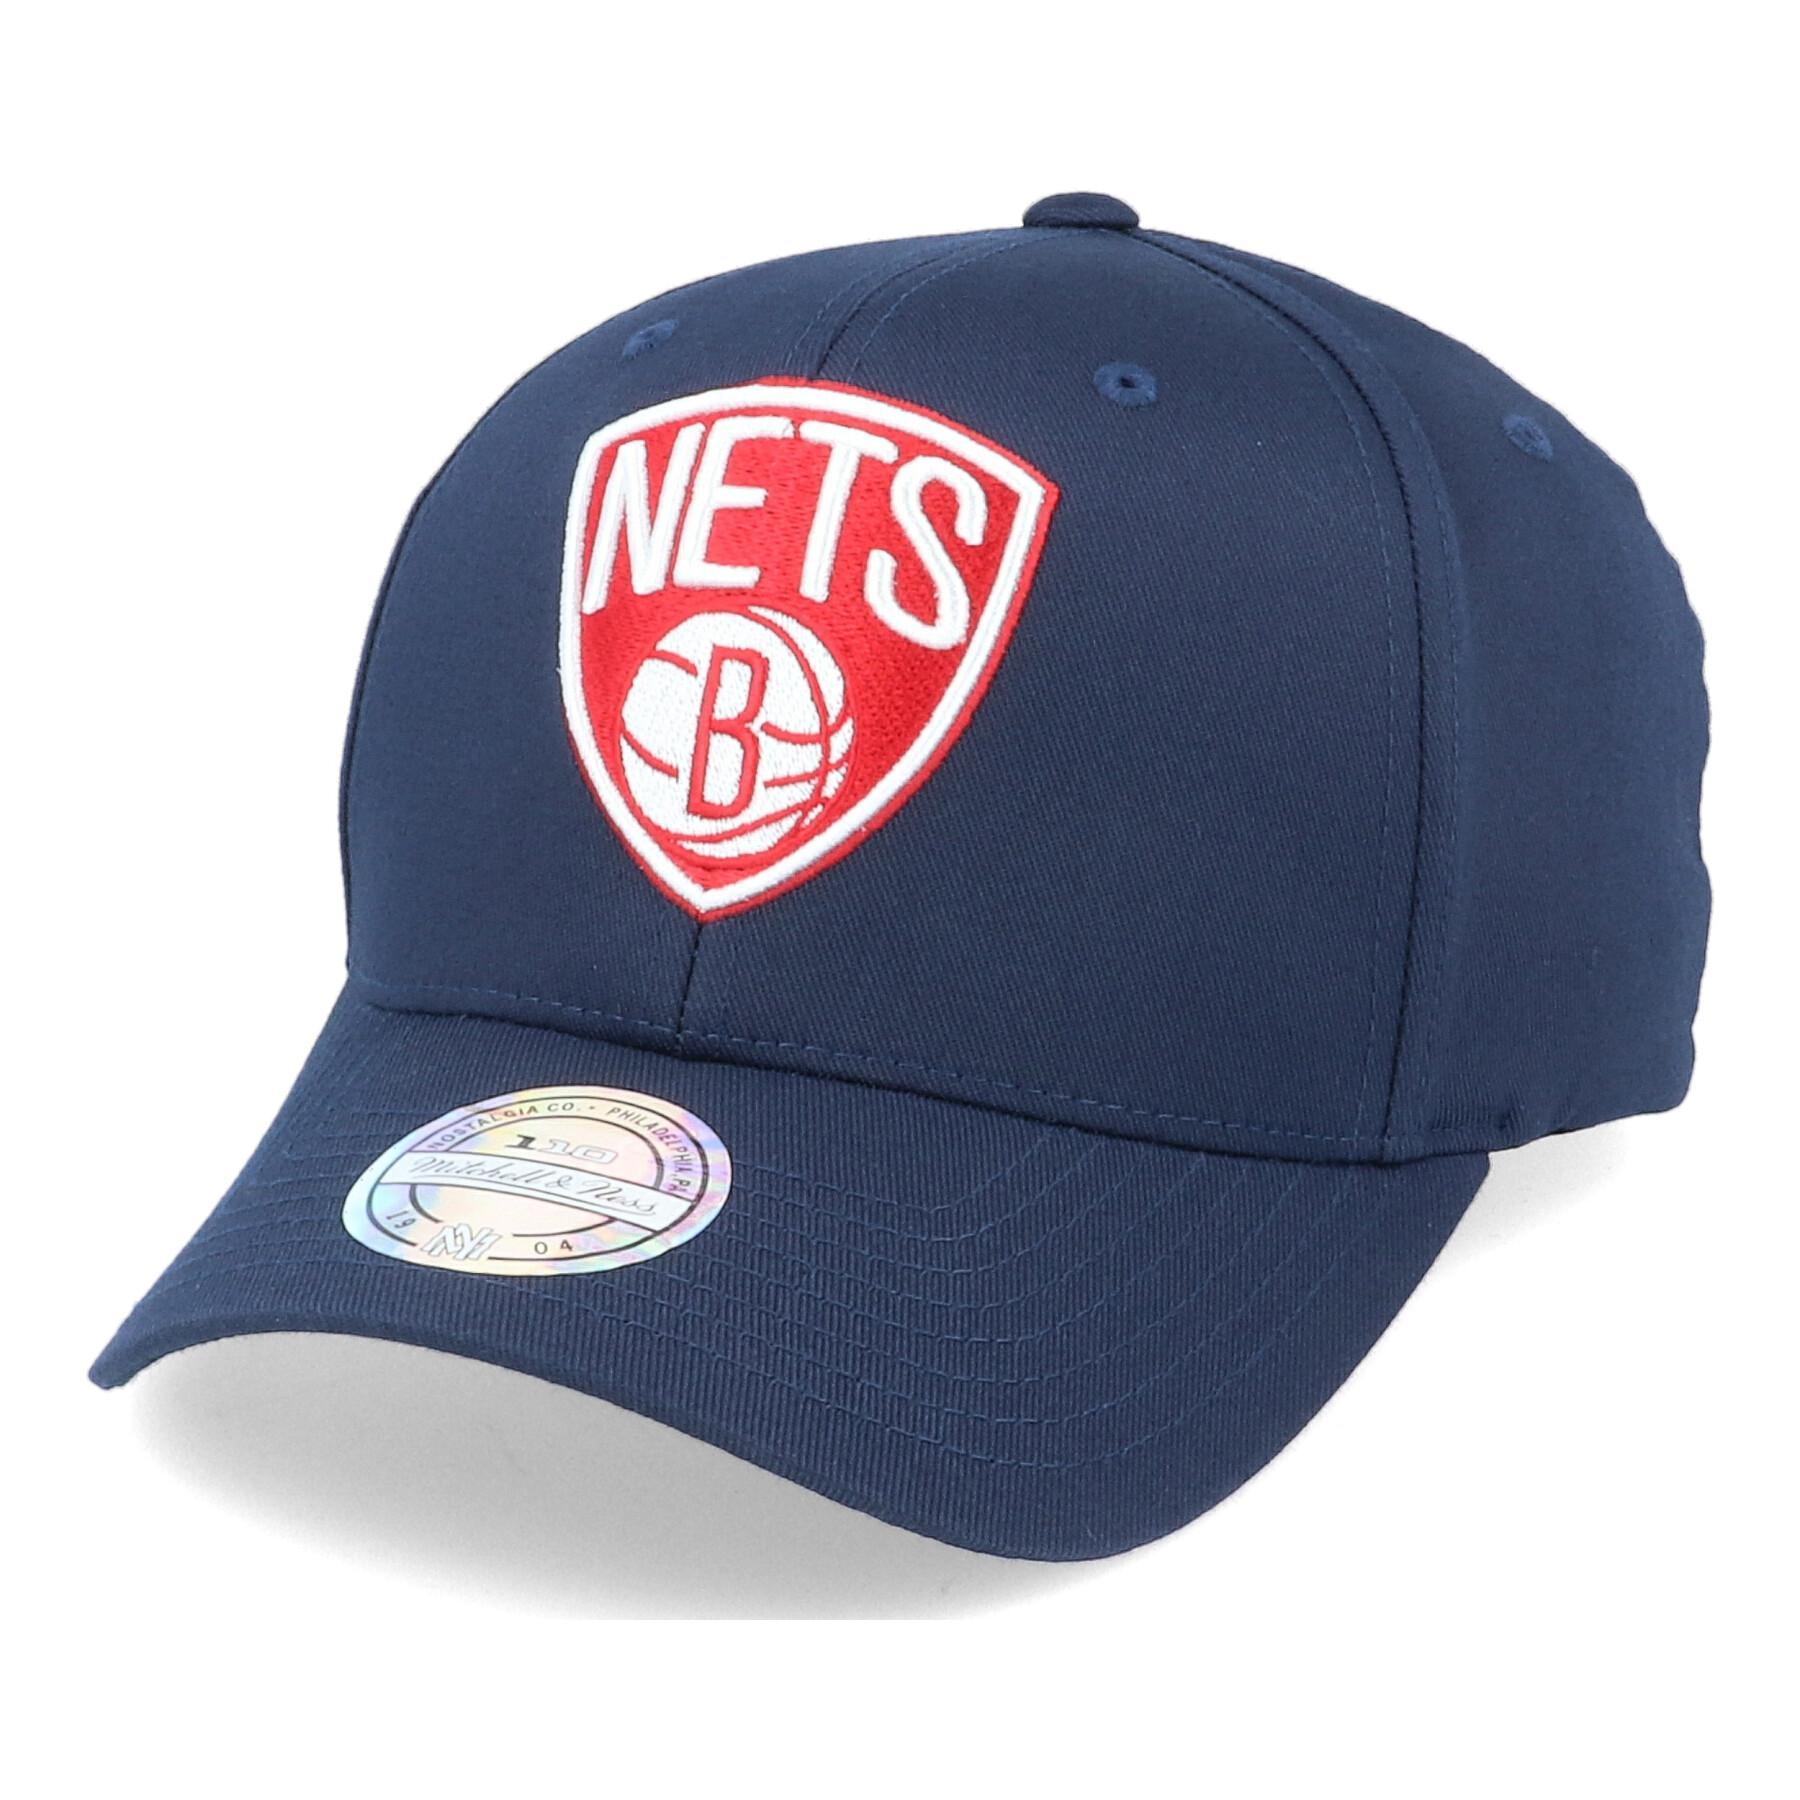 Cap Brooklyn Nets navy/red/white 110